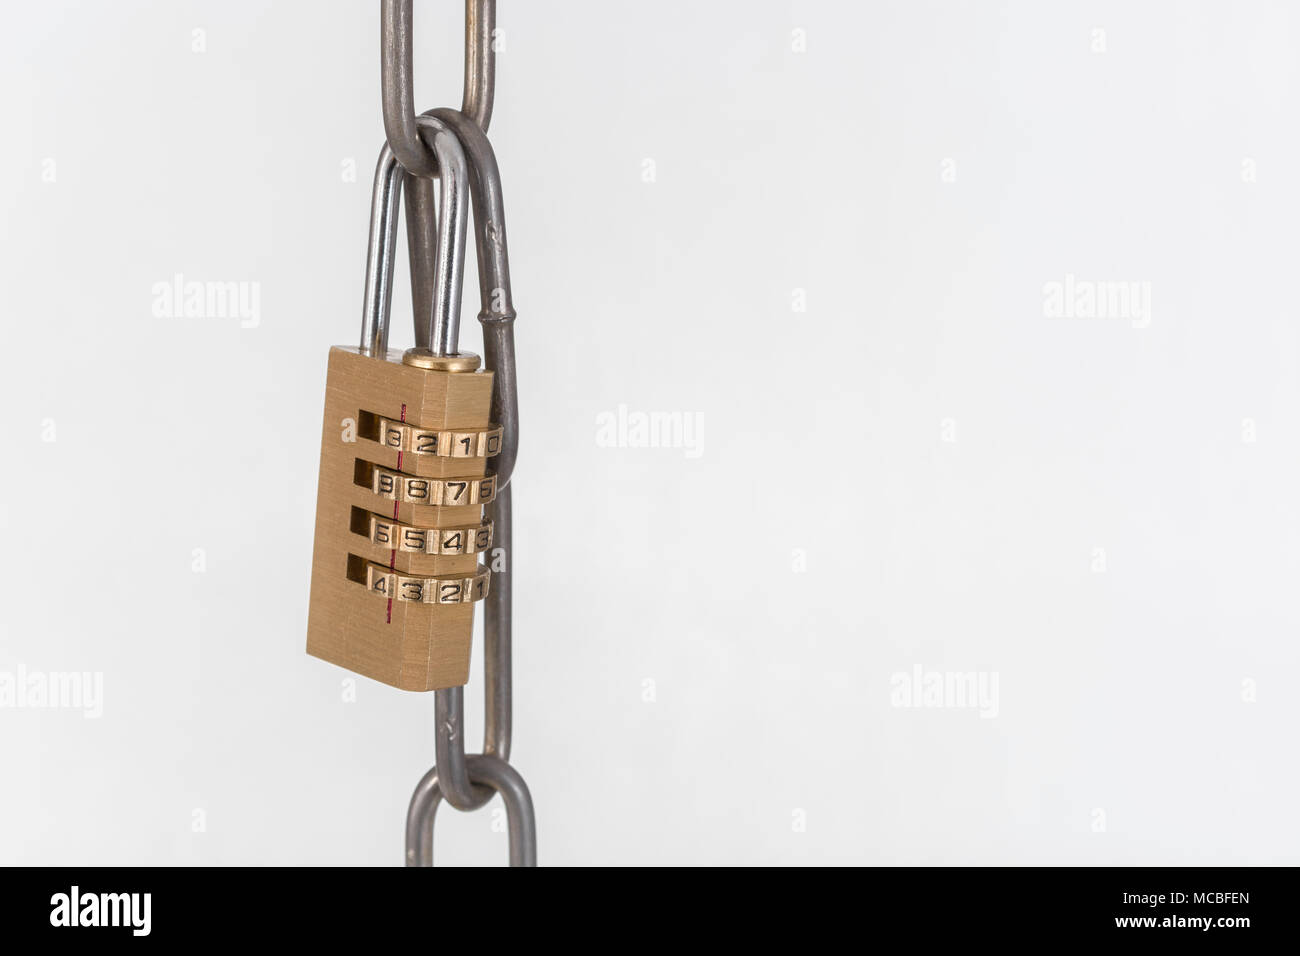 Macro-photo of small combination padlock with metal chain links. Metaphor for Blochain / Bitcoin blockchain. China Bitcoin conference metaphor. Stock Photo